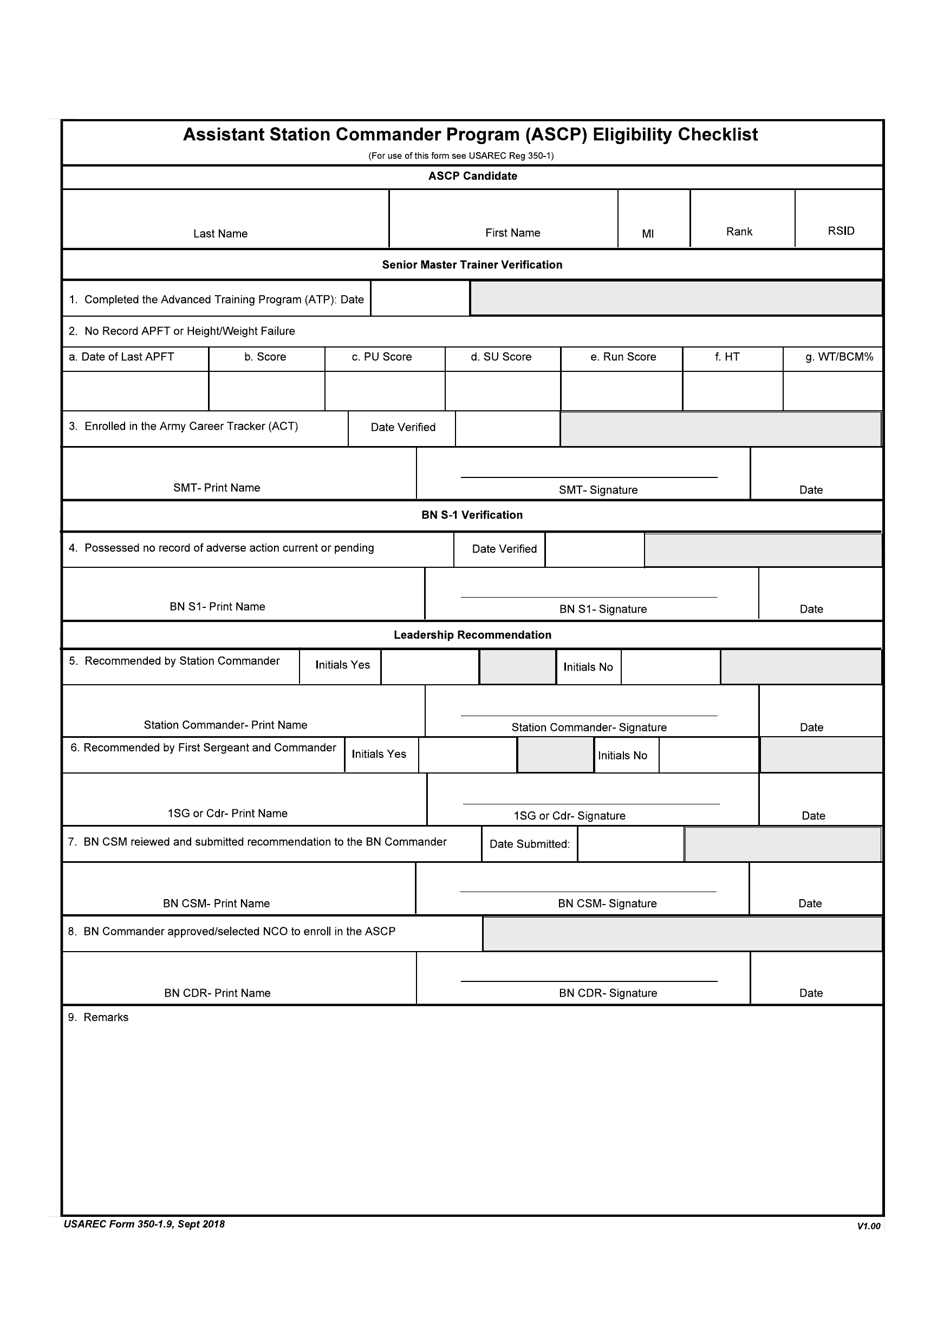 USAREC Form 350-1.9 Assistant Station Commander Program (Ascp) Eligibility Checklist, Page 1